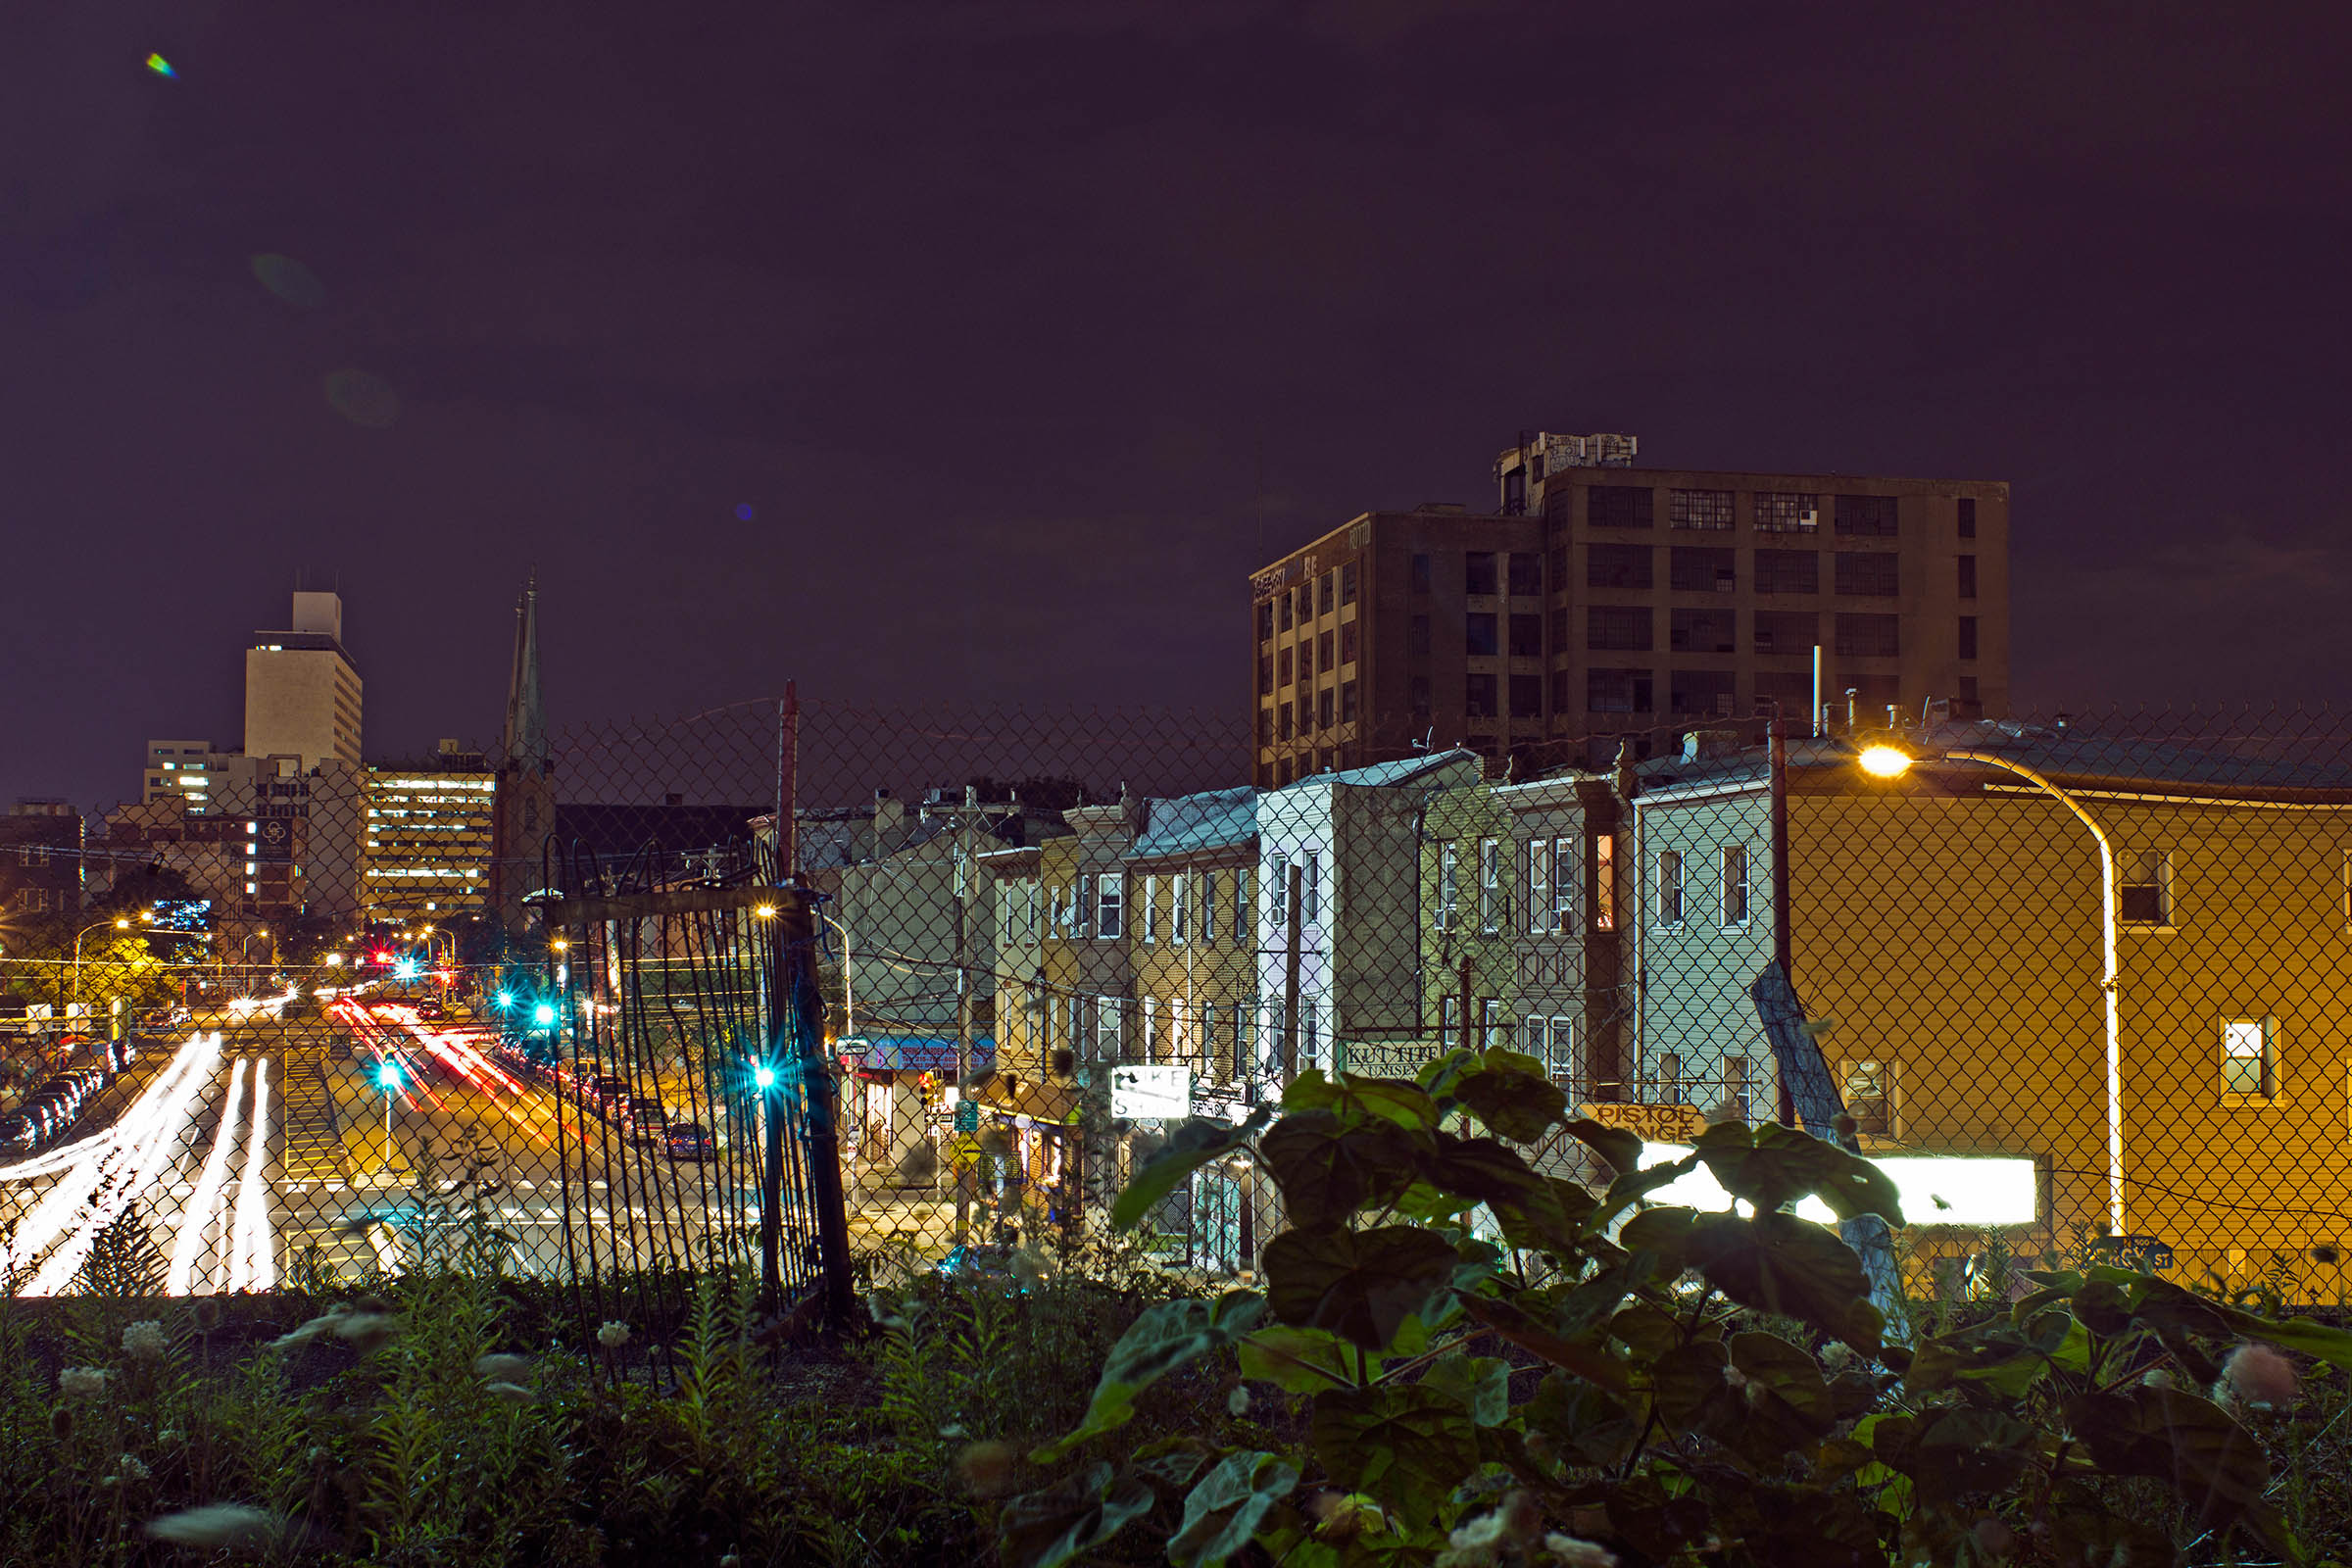 Night shot of Spring Garden Street from the Reading Viaduct, Philadelphia, PA, USA, 2014.